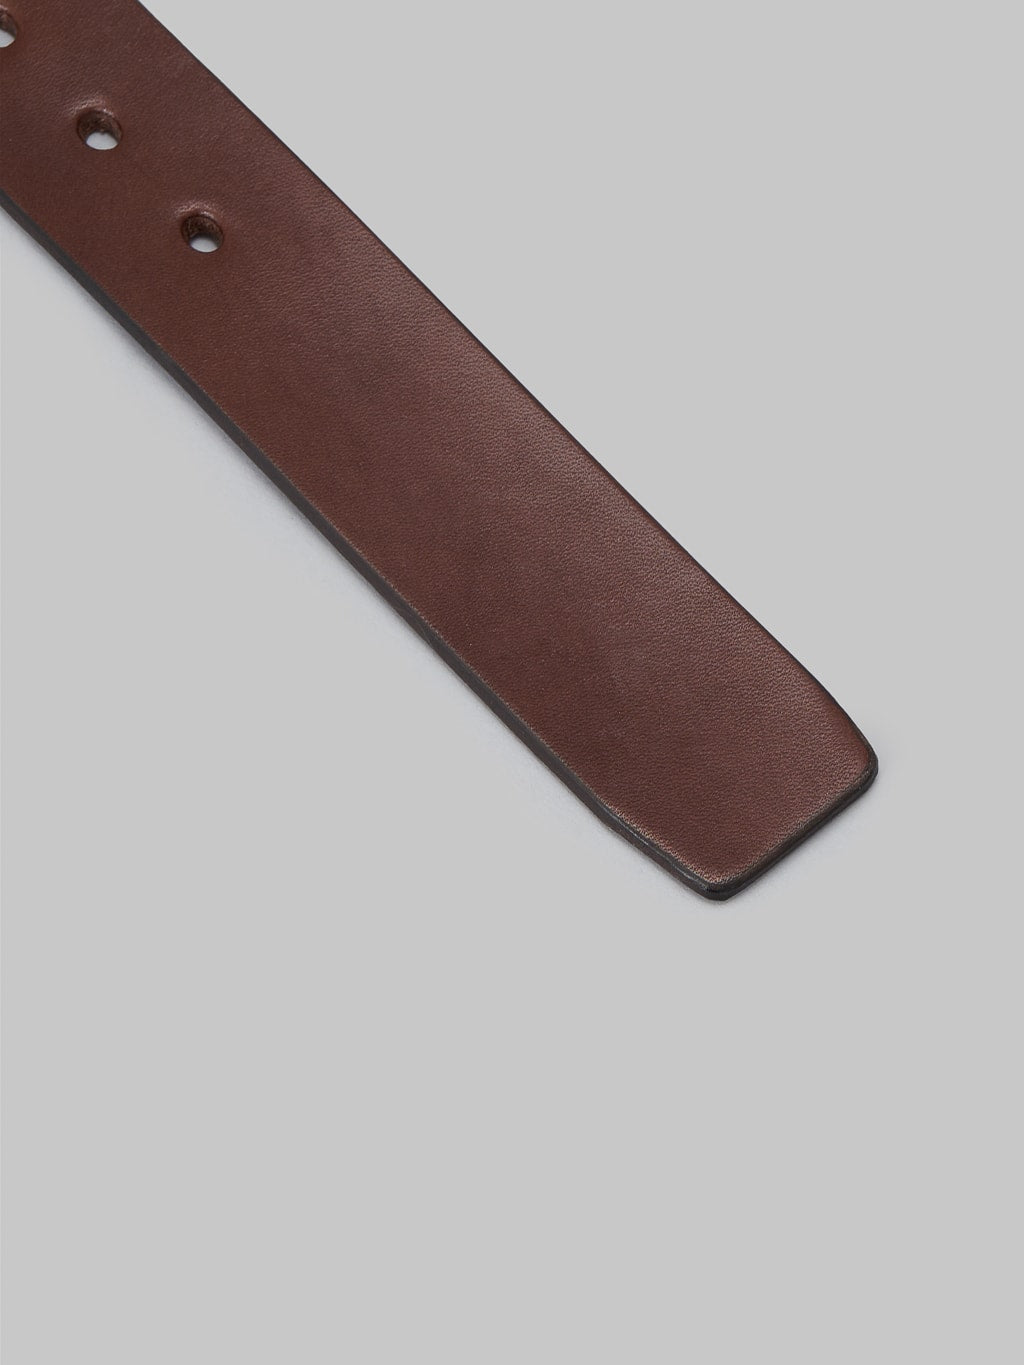 Momotaro AS 58 brown dye Bens Leather Belt cowhide